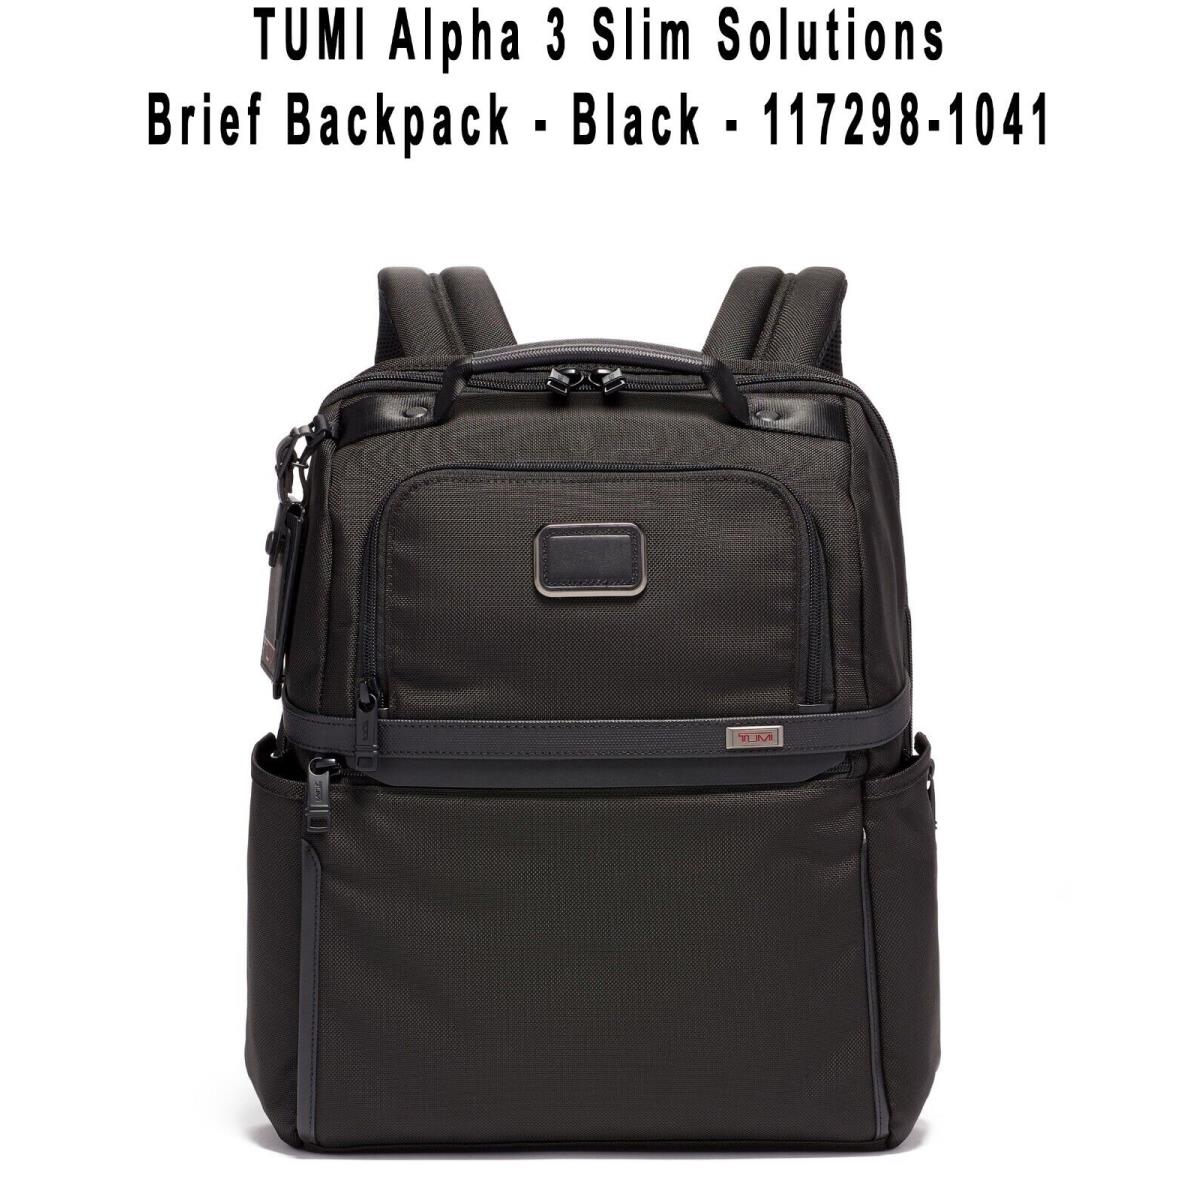 Tumi Alpha 3 Slim Solutions Brief Backpack - Black - 117298-1041